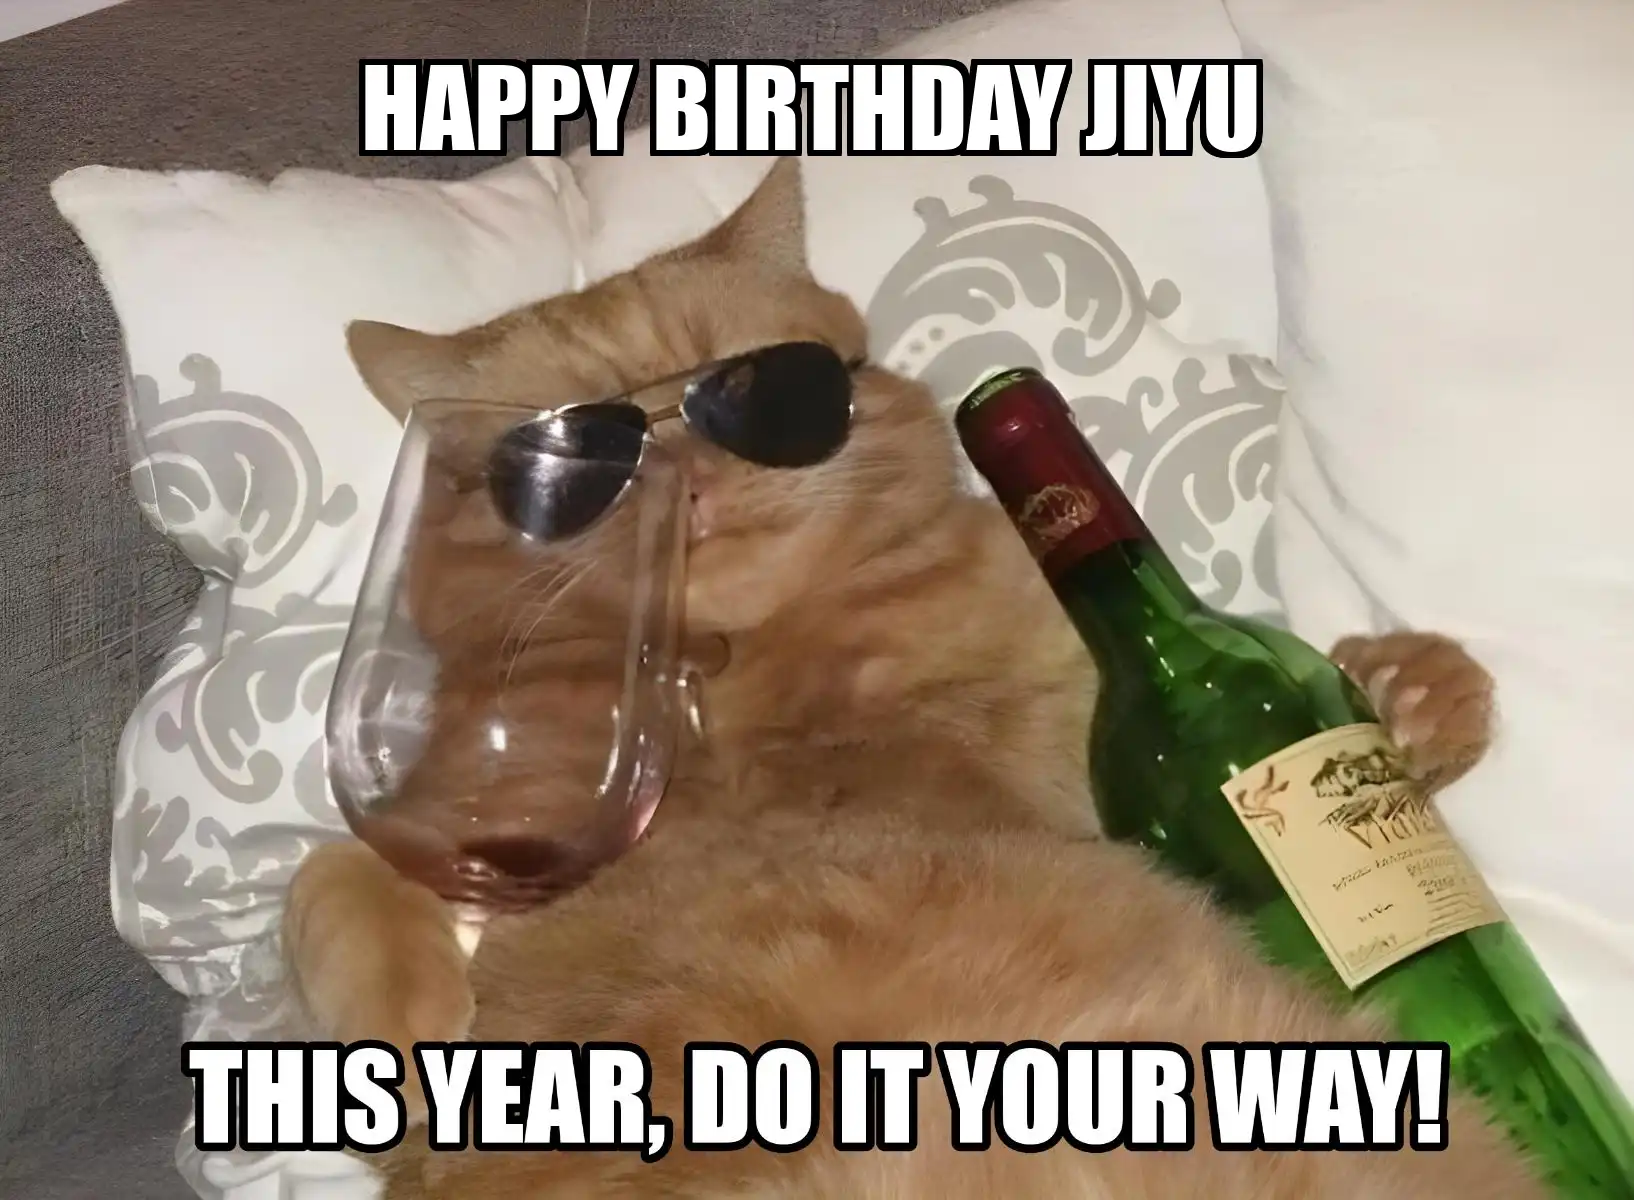 Happy Birthday Jiyu This Year Do It Your Way Meme